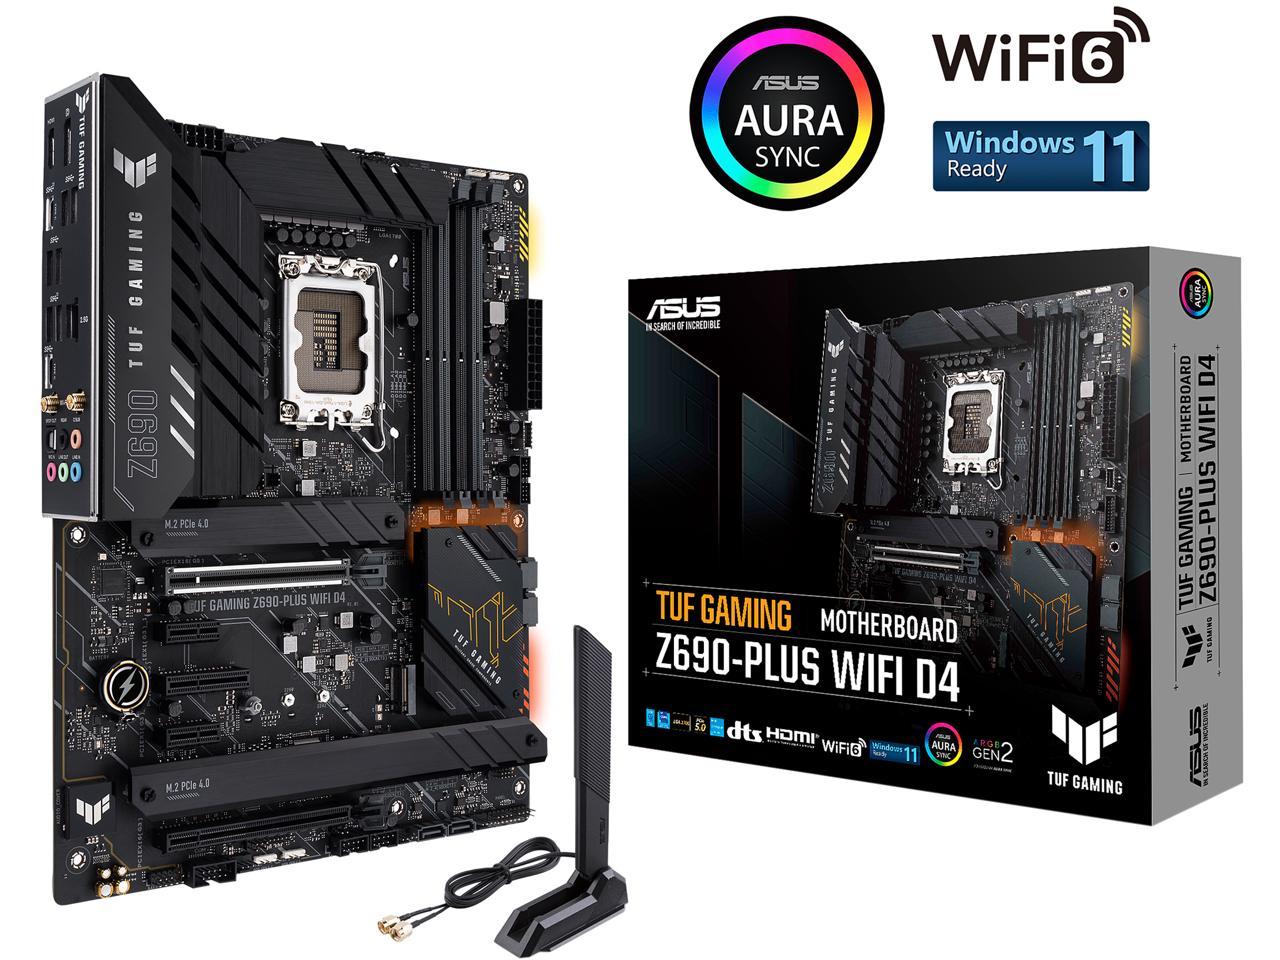 ASUS TUF Gaming Z690-Plus WiFi D4 LGA 1700 Intel 12th Gen ATX Gaming  Motherboard- PCIe 5.0, DDR4, 4xM.2/NVMe SSD, 14+2 Power Stages, WiFi 6,  Intel 